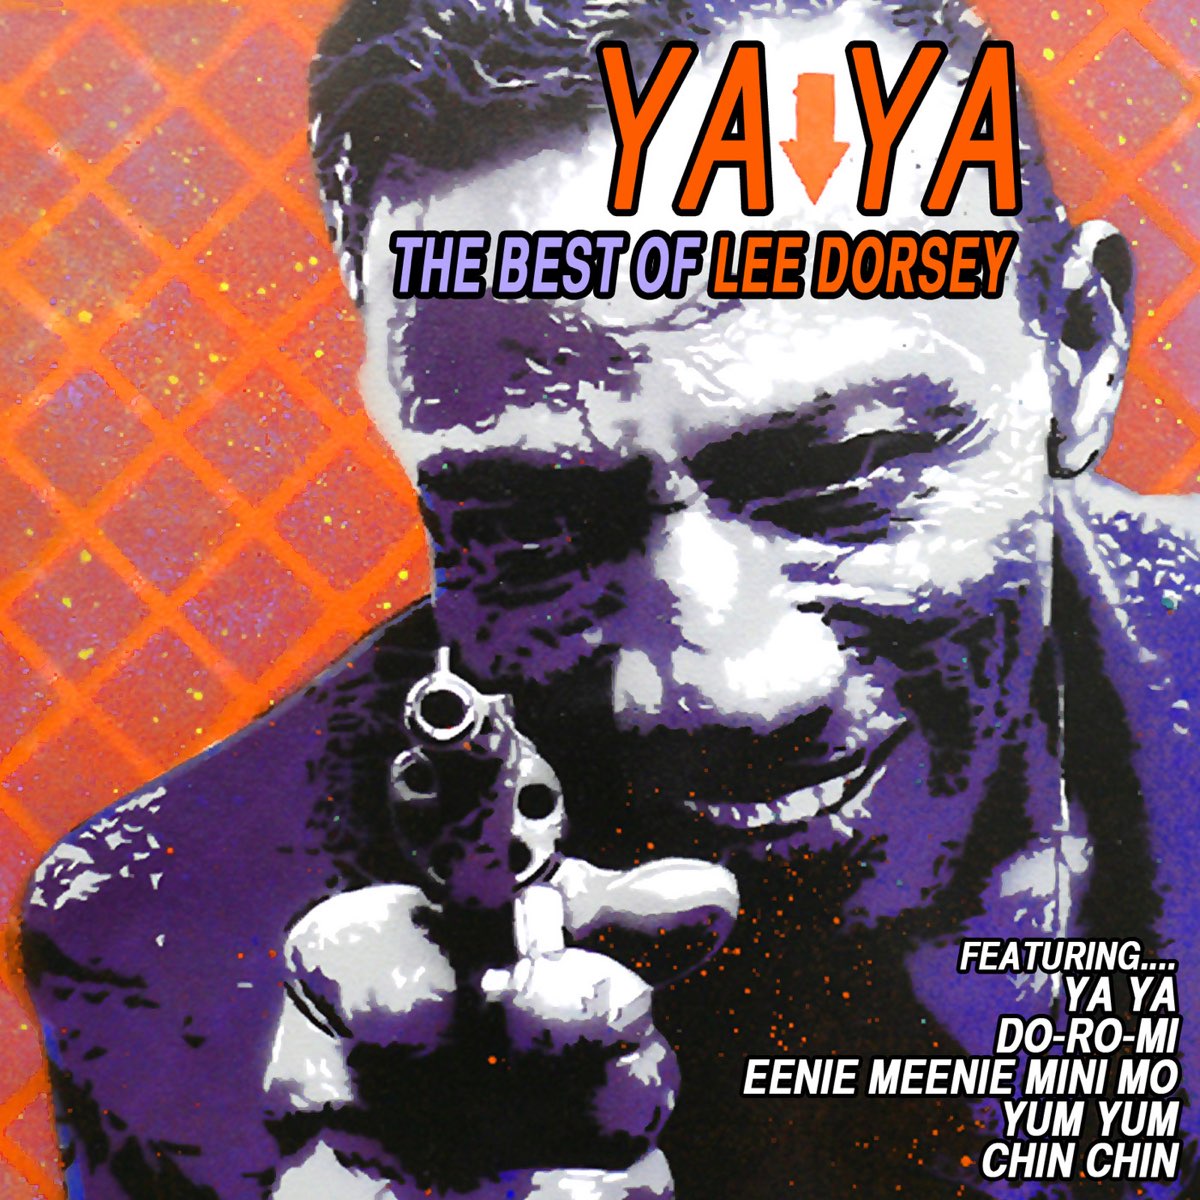 Ya Ya: The Best of Lee Dorsey by Lee Dorsey on Apple Music